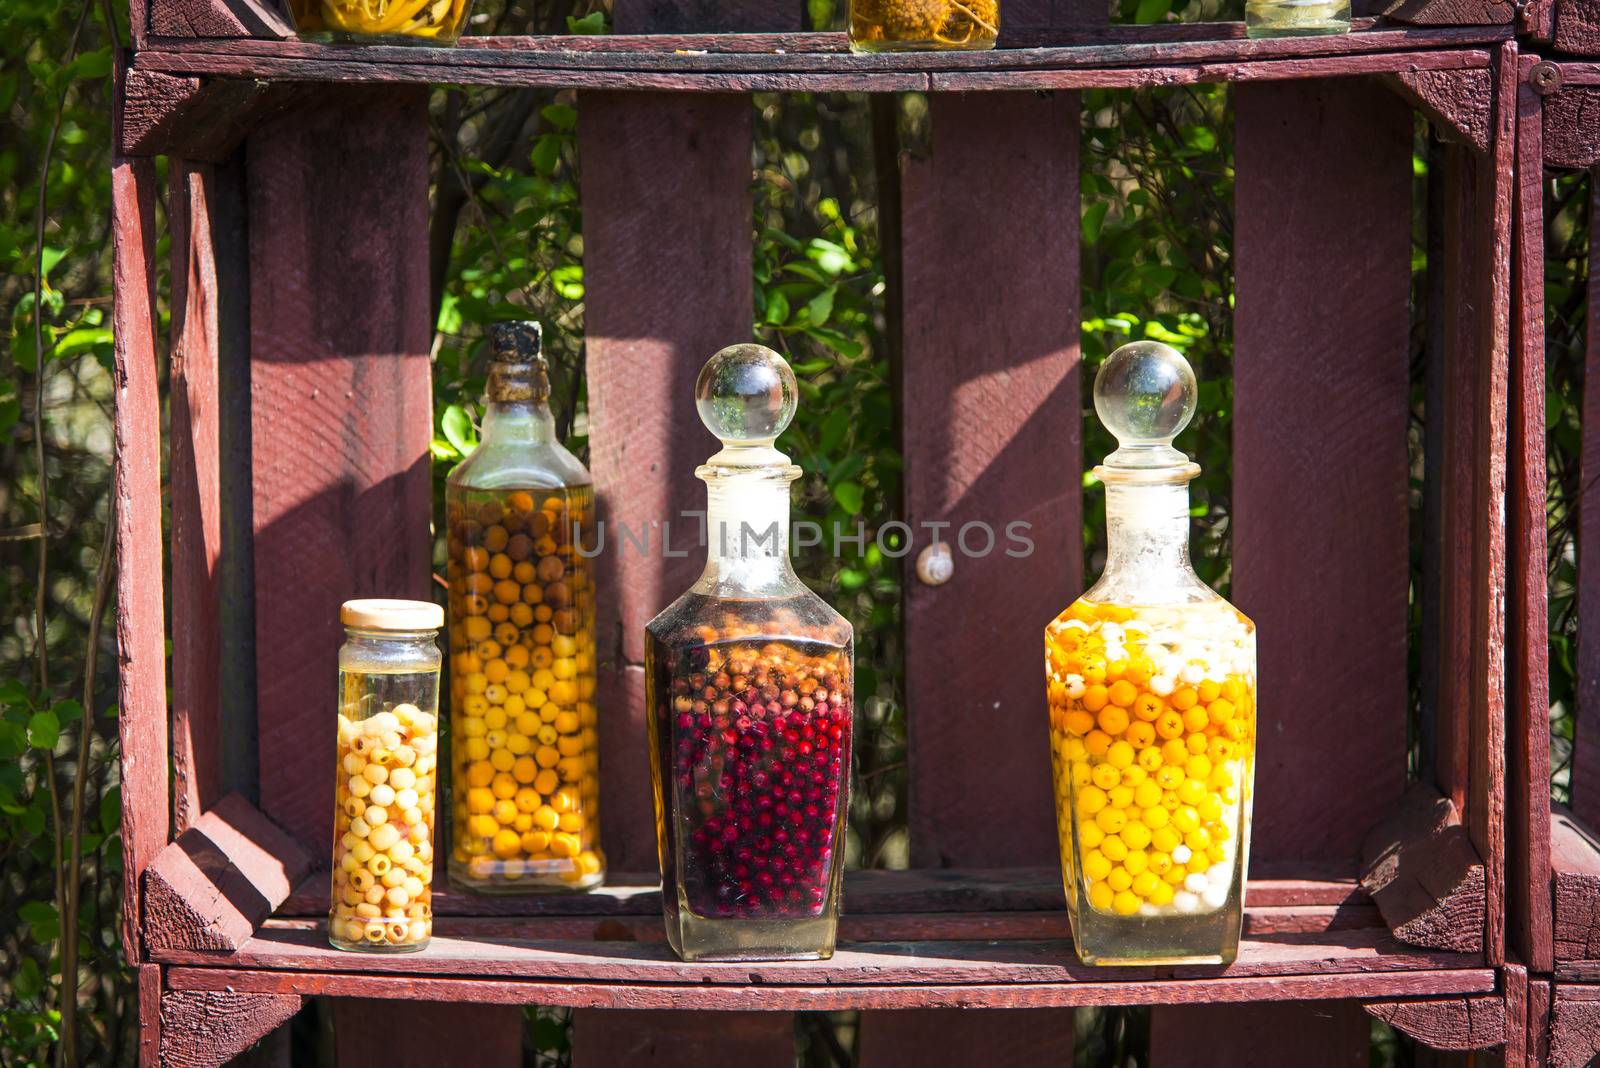 Preserves made of rowan fruits